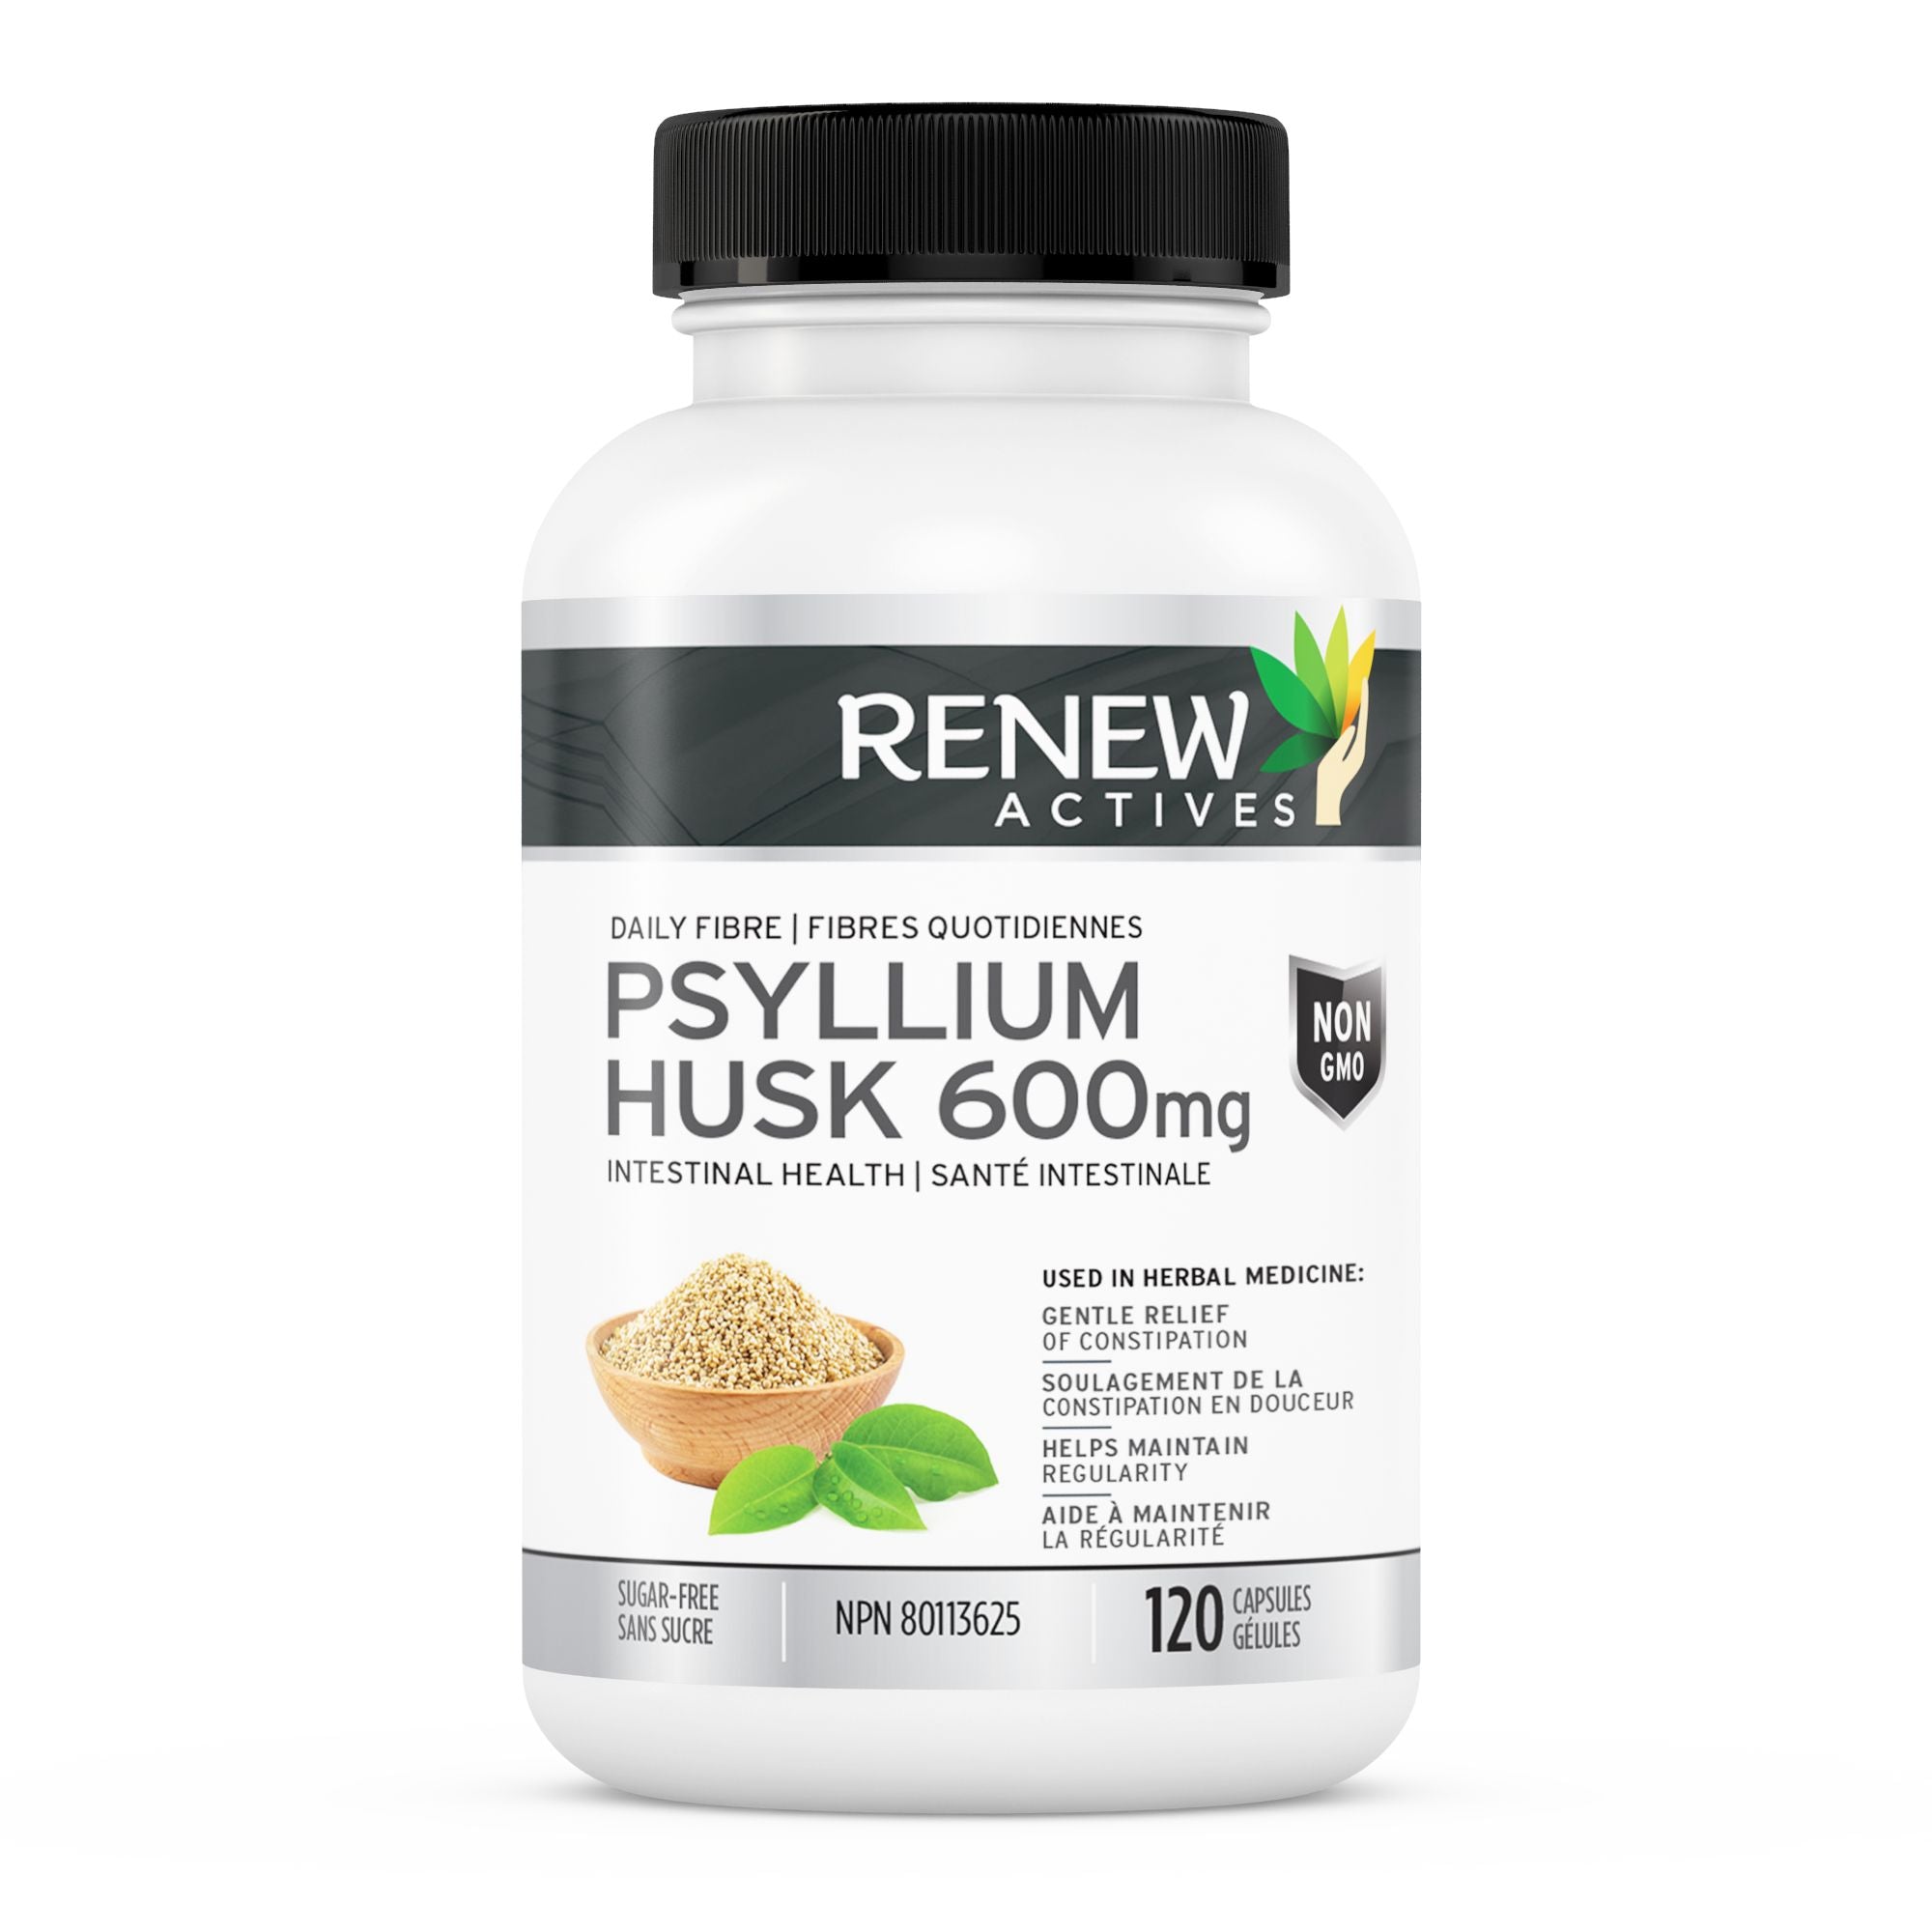 Renew Actives Psyllium Husk Capsules, 600 mg, 120 Capsules, Soluble Fiber Supplement, Natural Stool Softener/Laxatives